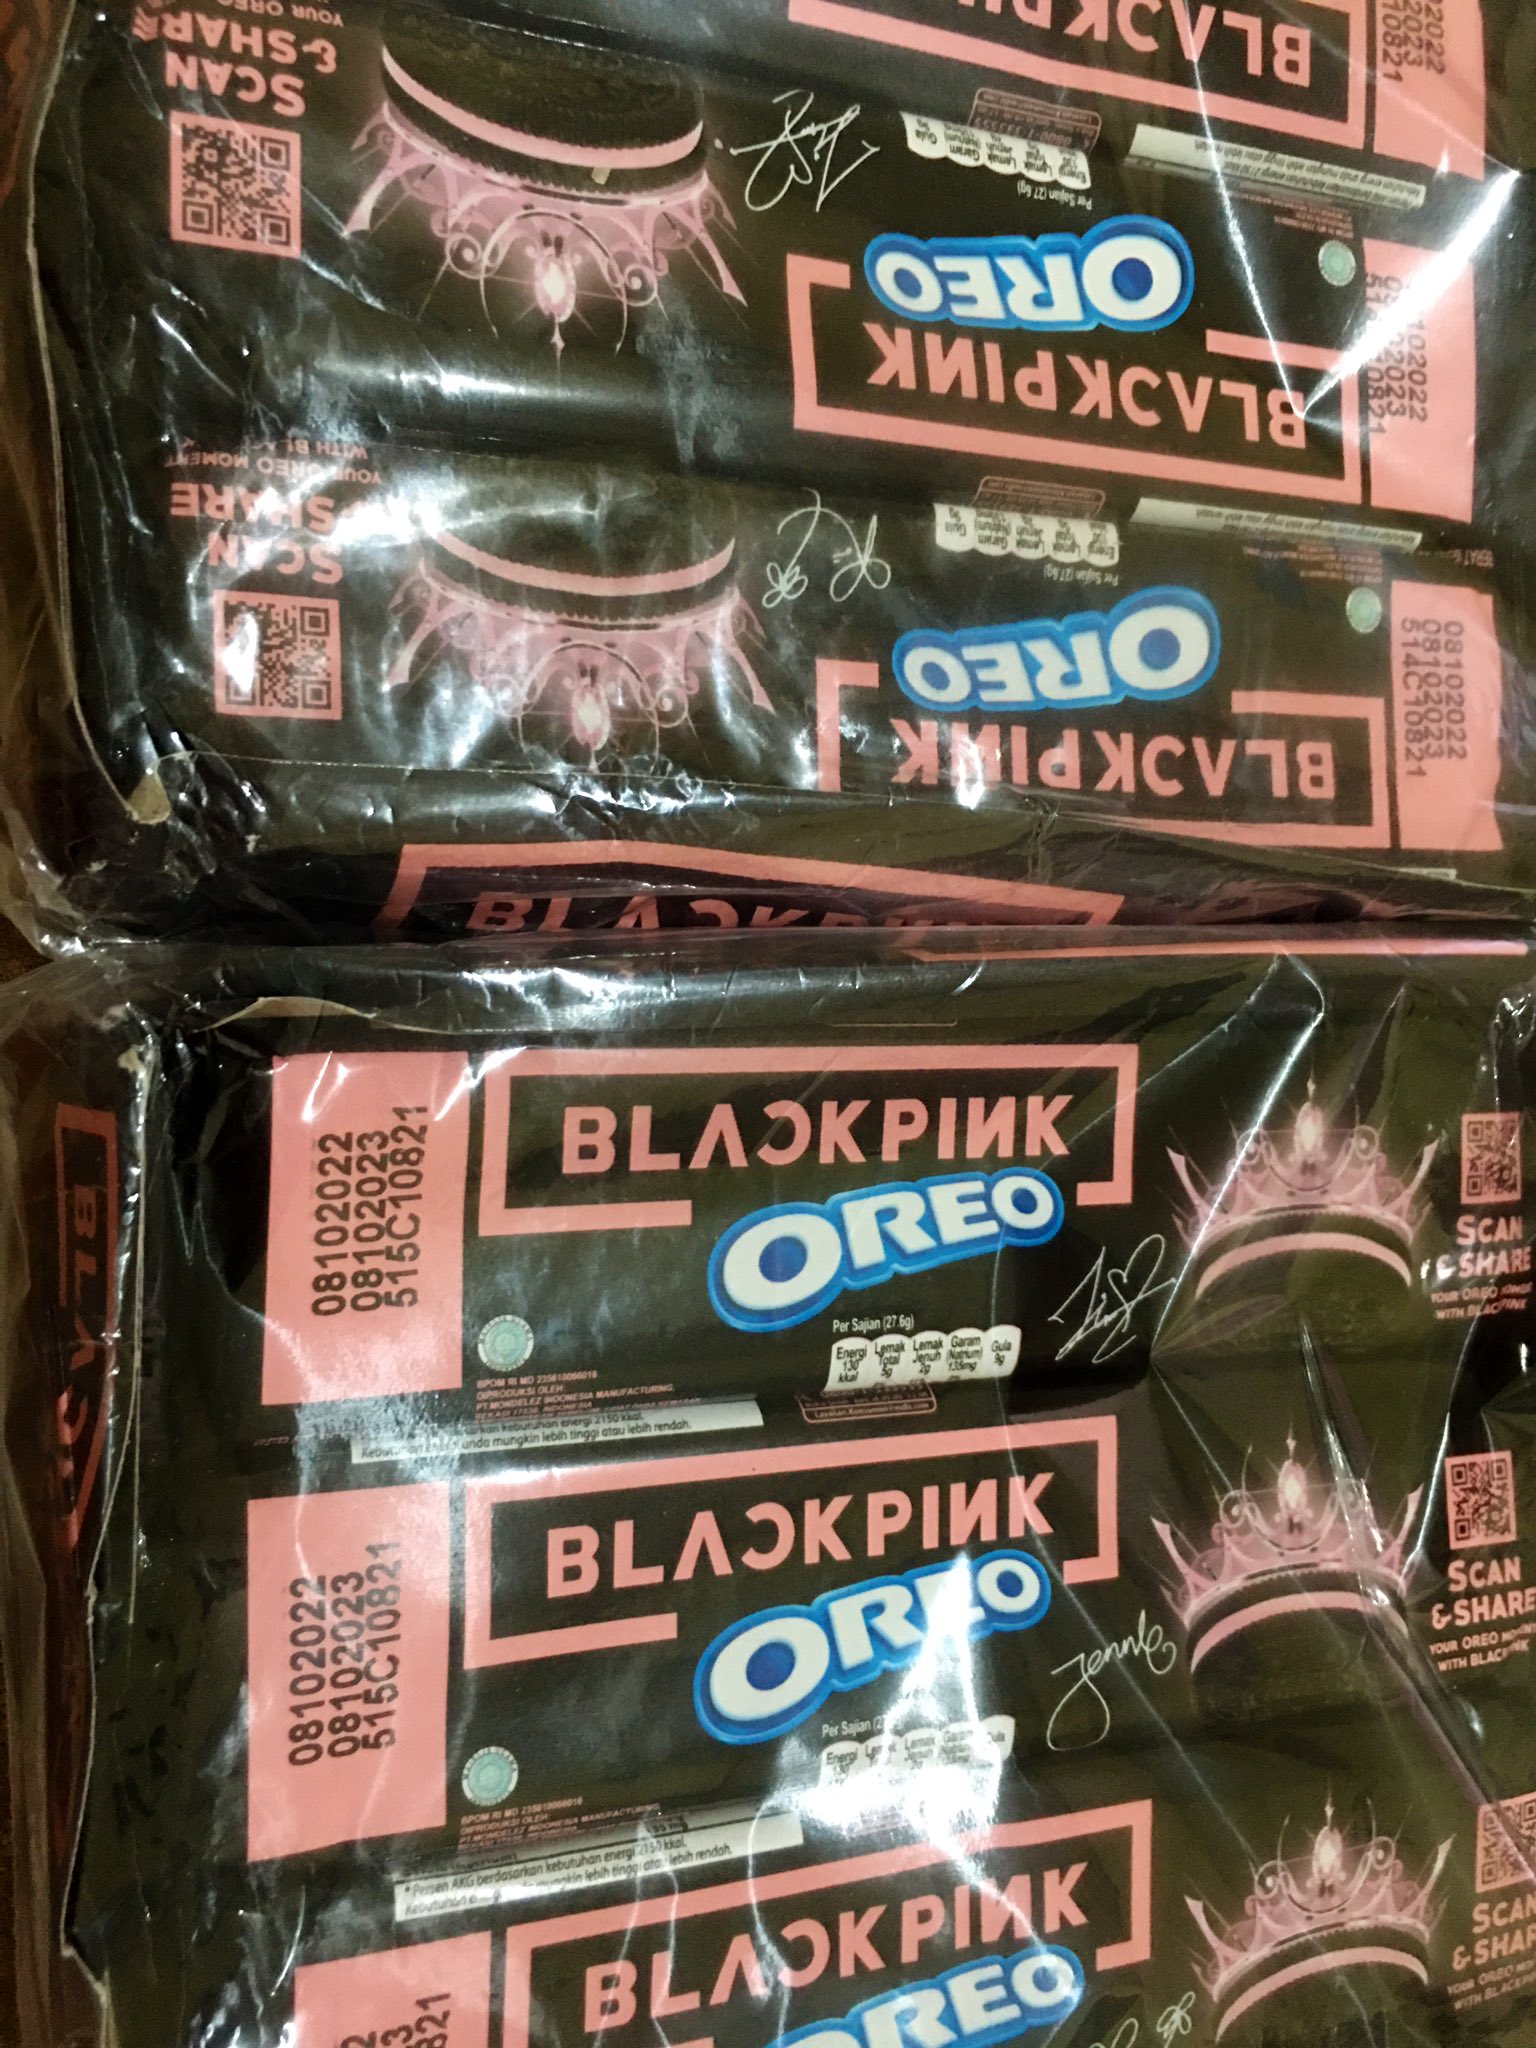 Blackpink Oreos